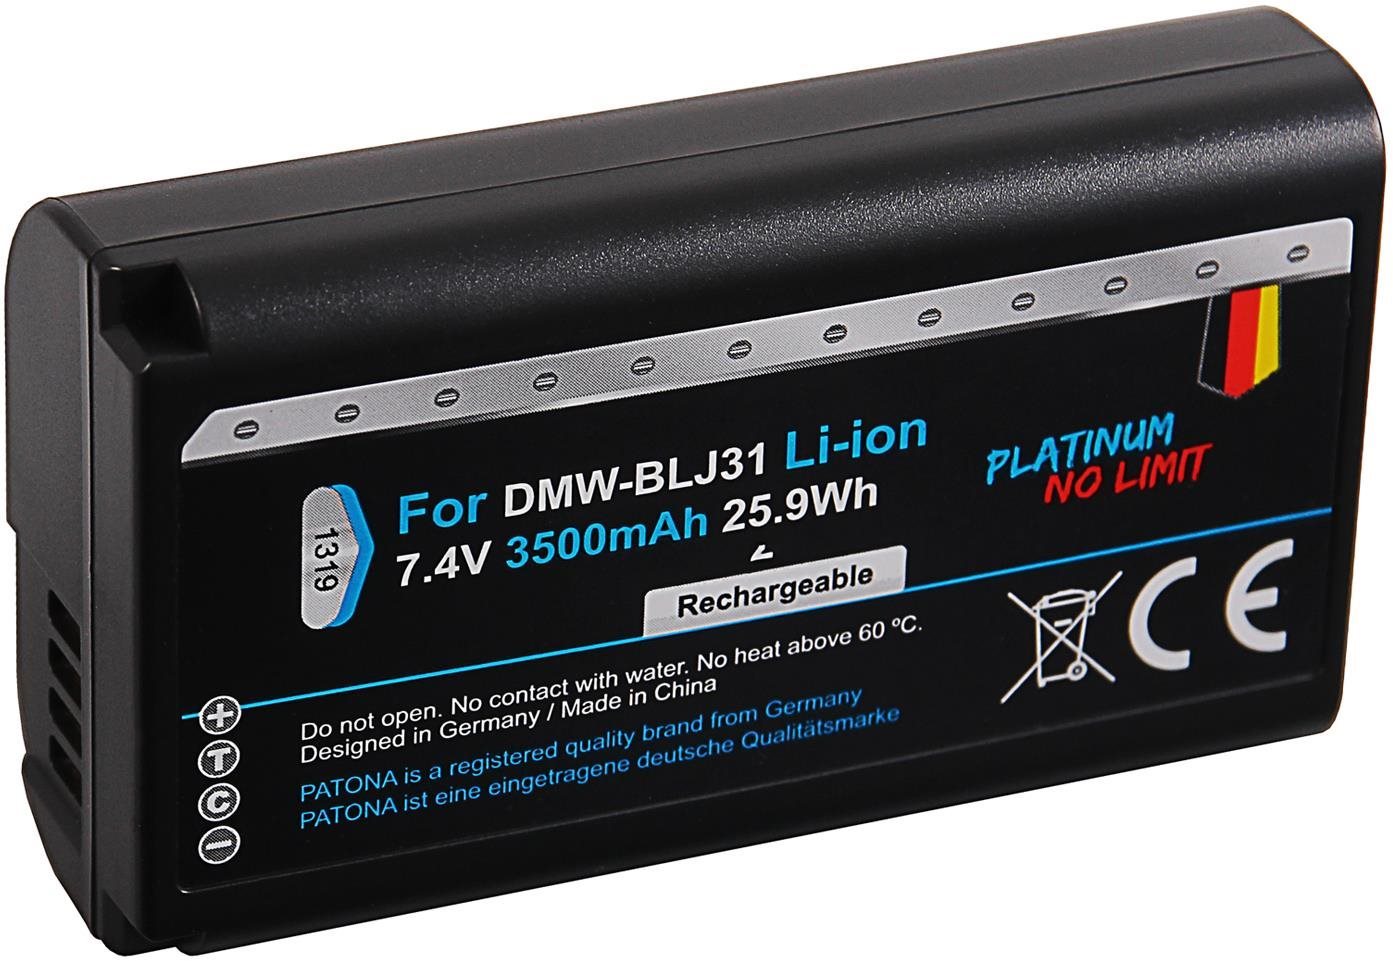 PATONA Panasonic DMW-BLJ31 3500mAh Li-Ion Platinum DC-S1